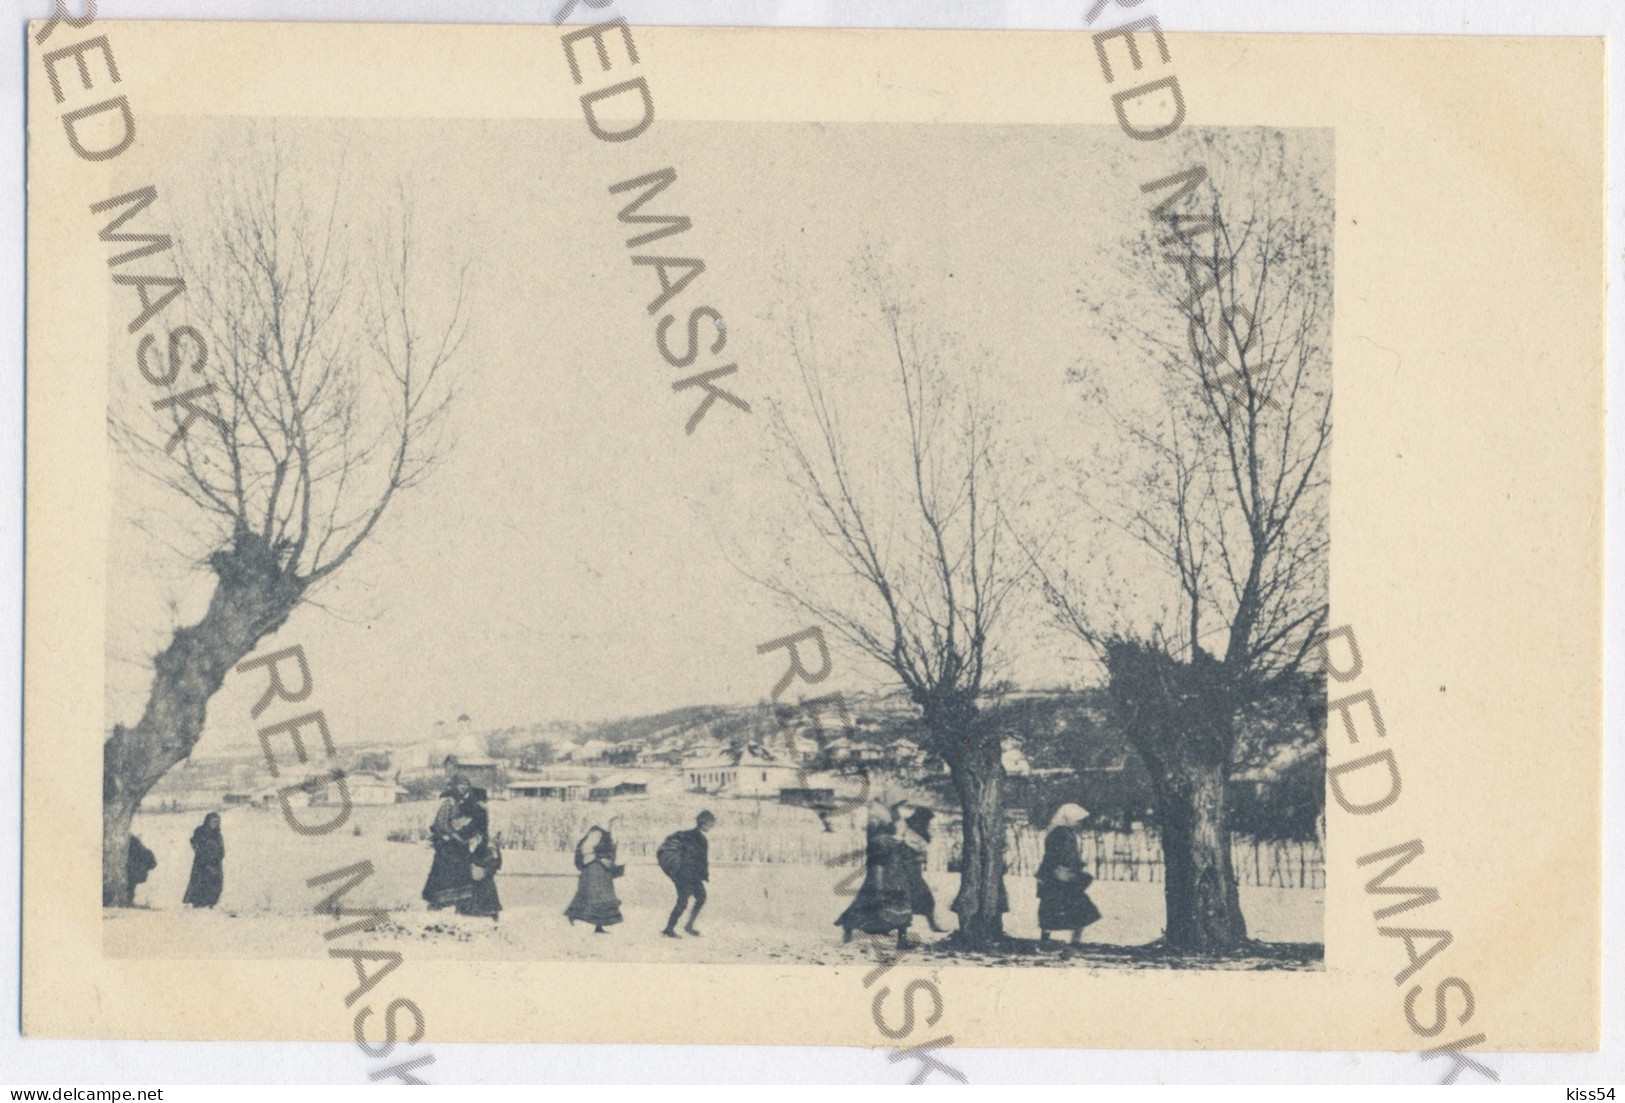 RO 84 - 11505 VLASCA, Teleorman, Serb Refugees, Romania - Old Postcard - Unused - Roumanie